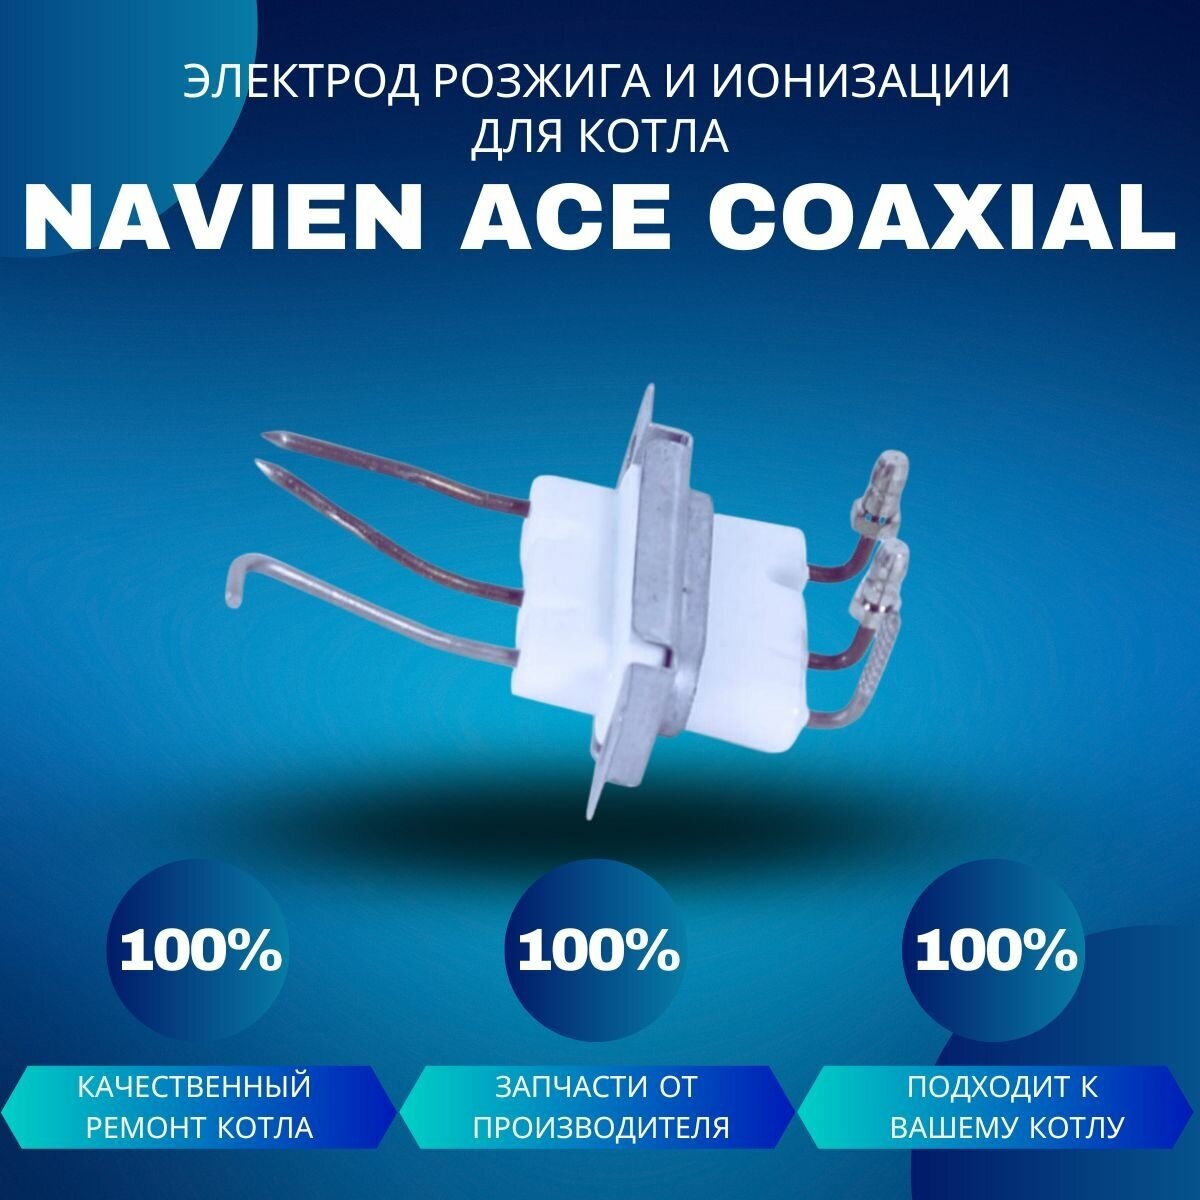 Электрод розжига и ионизации для котла Navien ACE Coaxial